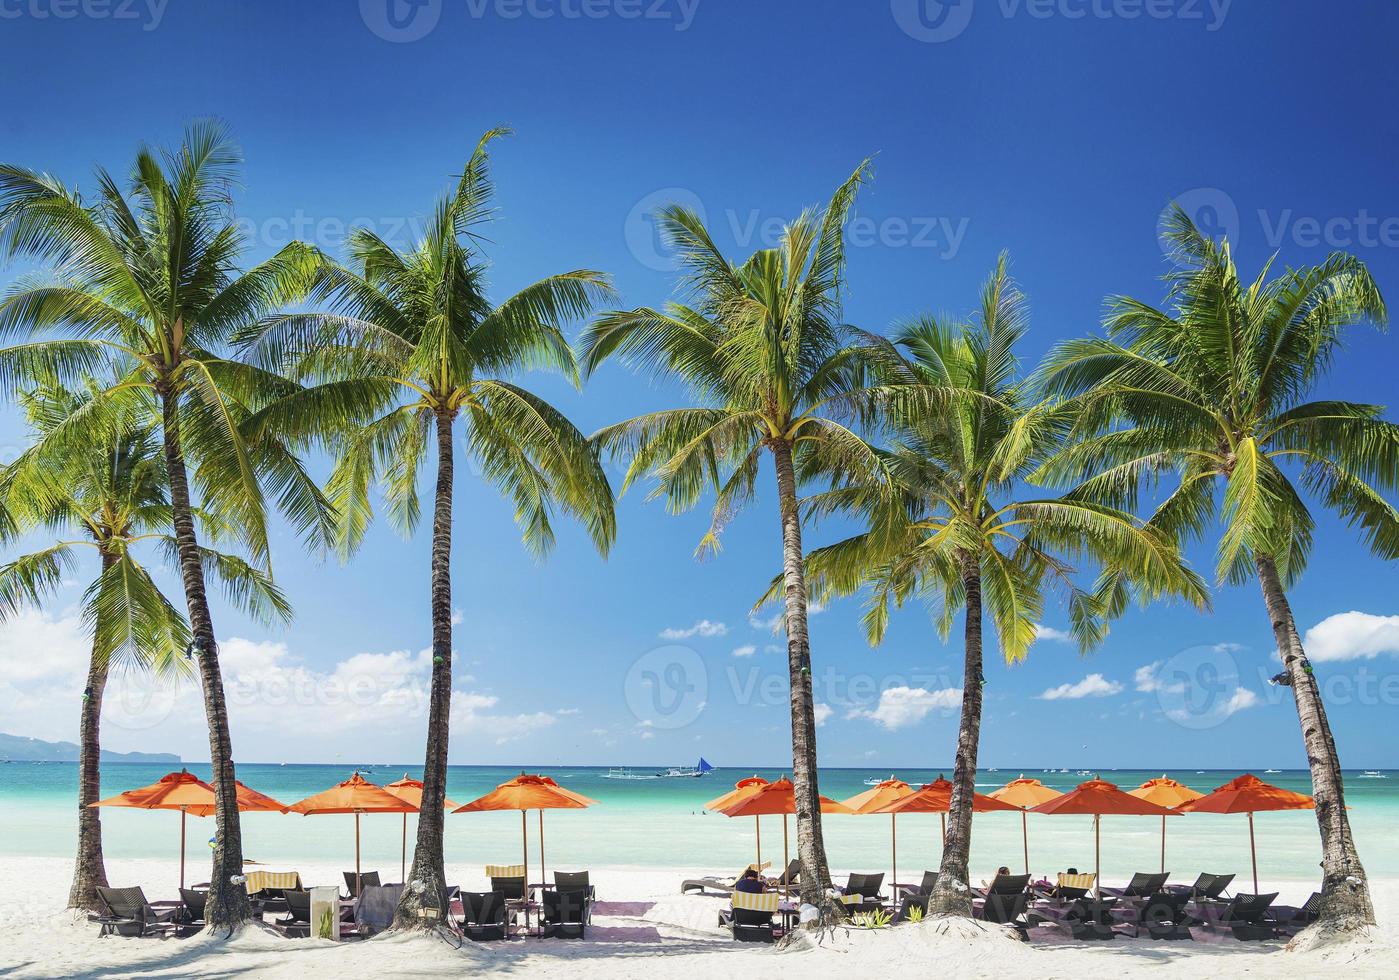 strand lounge bar ligstoelen stoelen en parasols op tropisch exotisch boracay eiland in filipijnen foto